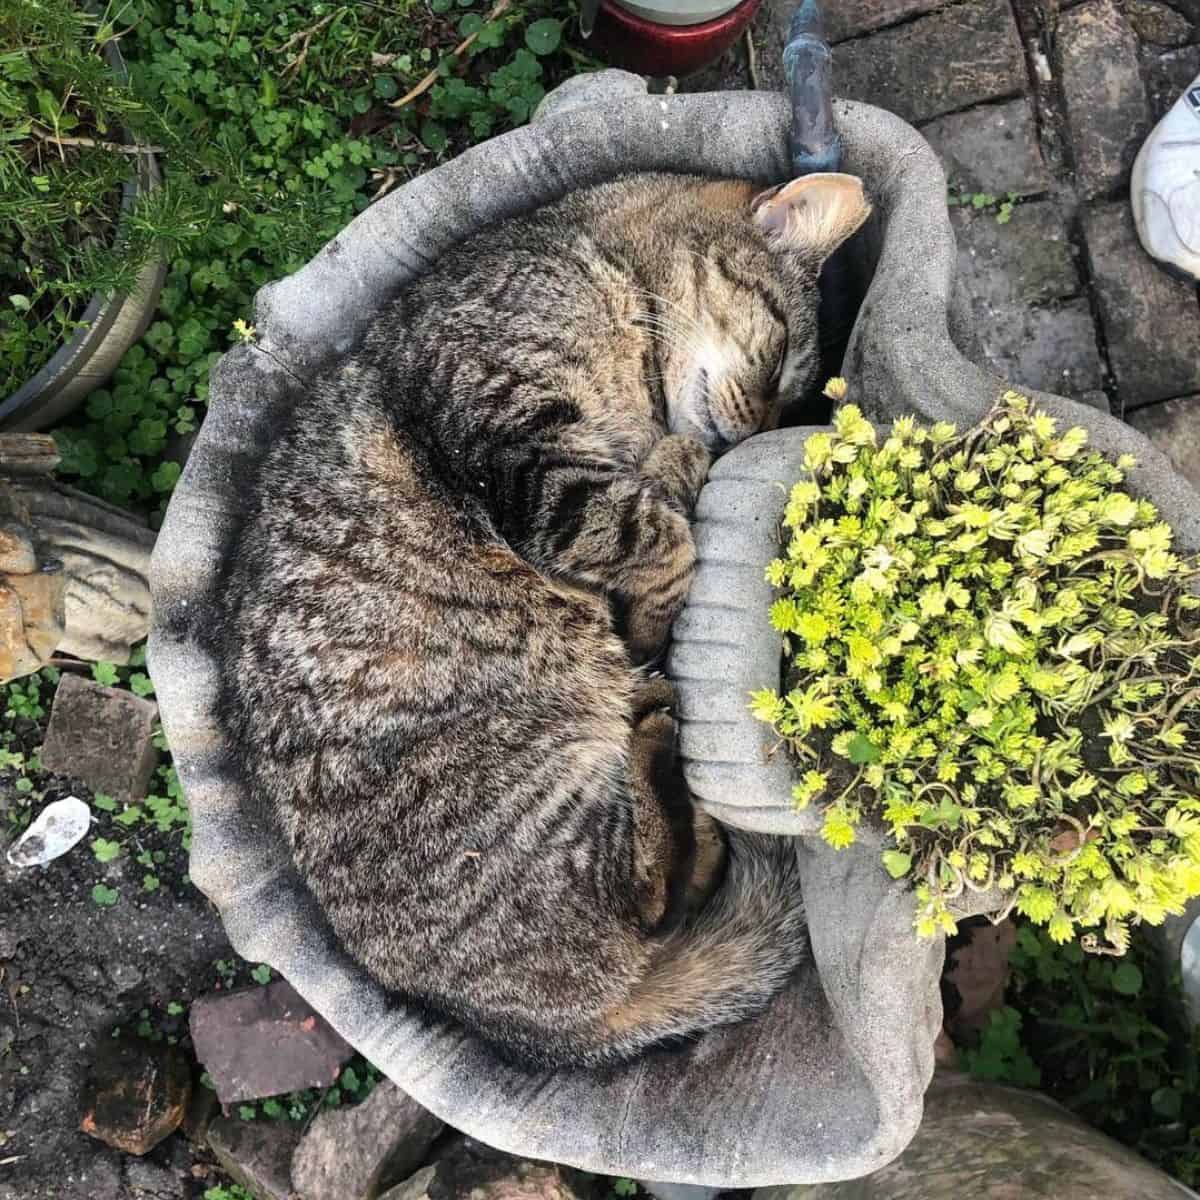 cat sleeps in the ceramic pot